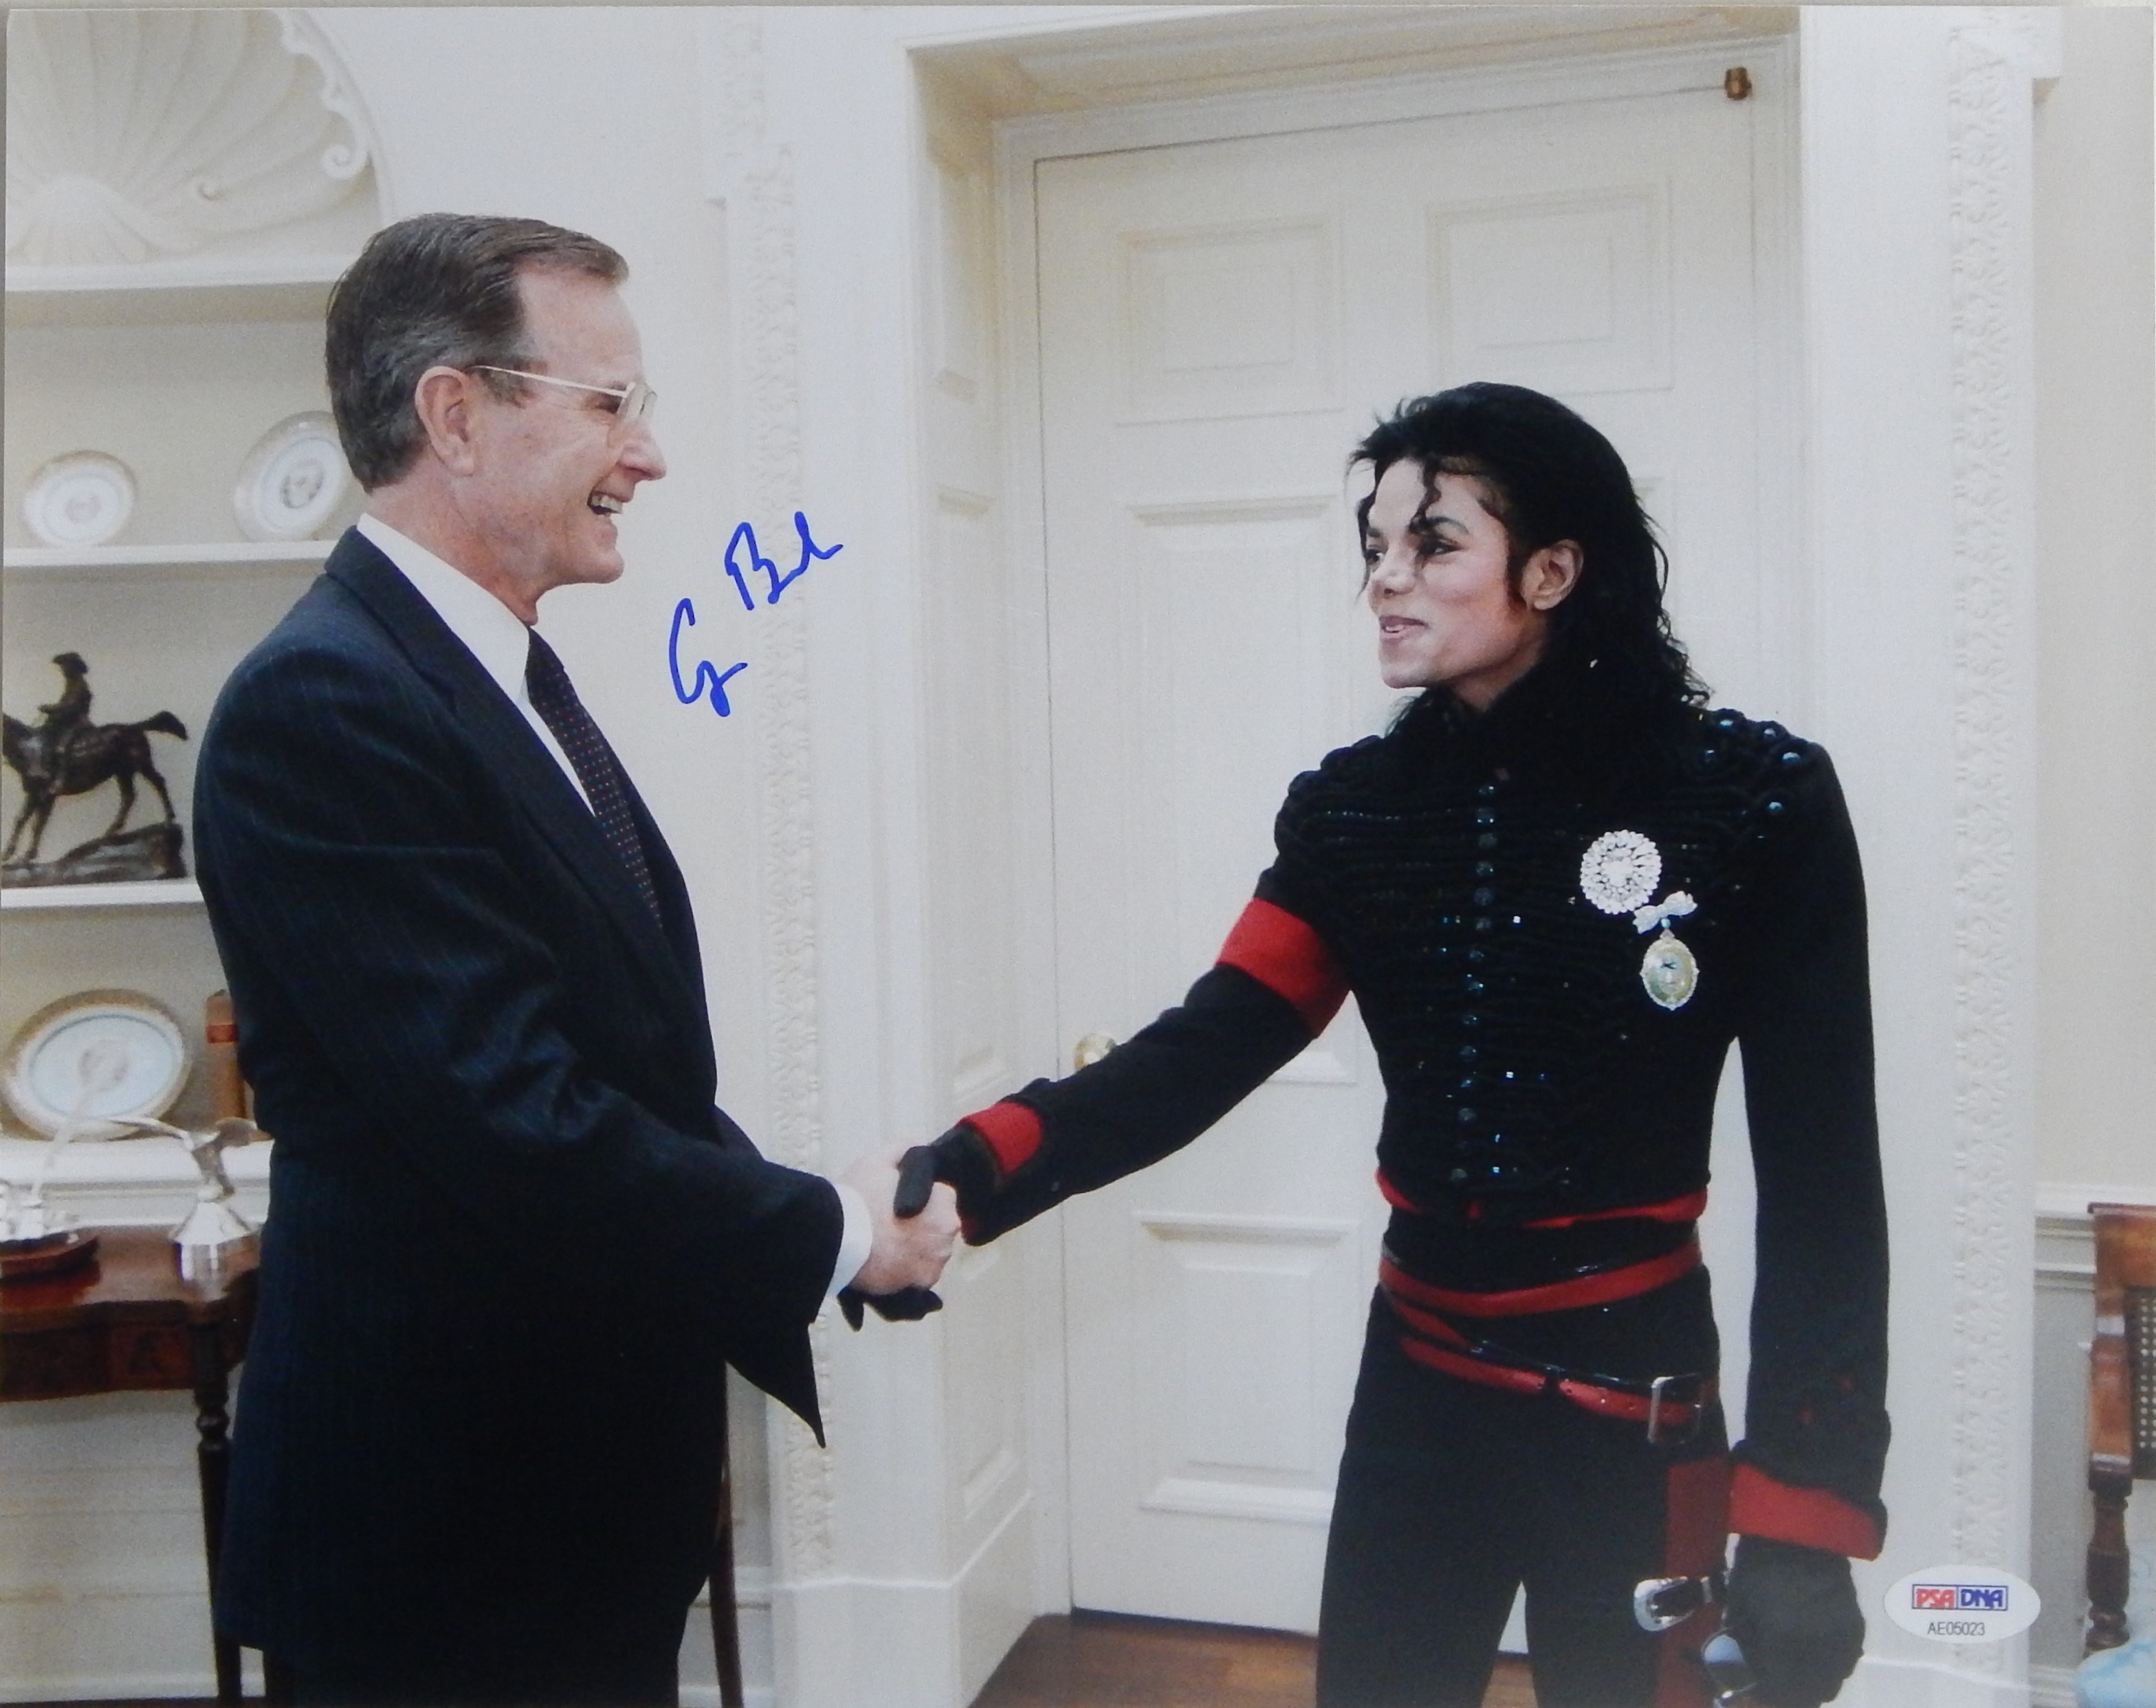 President George HW Bush 16x20" Signed Photo Meeting Michael Jackson (PSA/DNA)